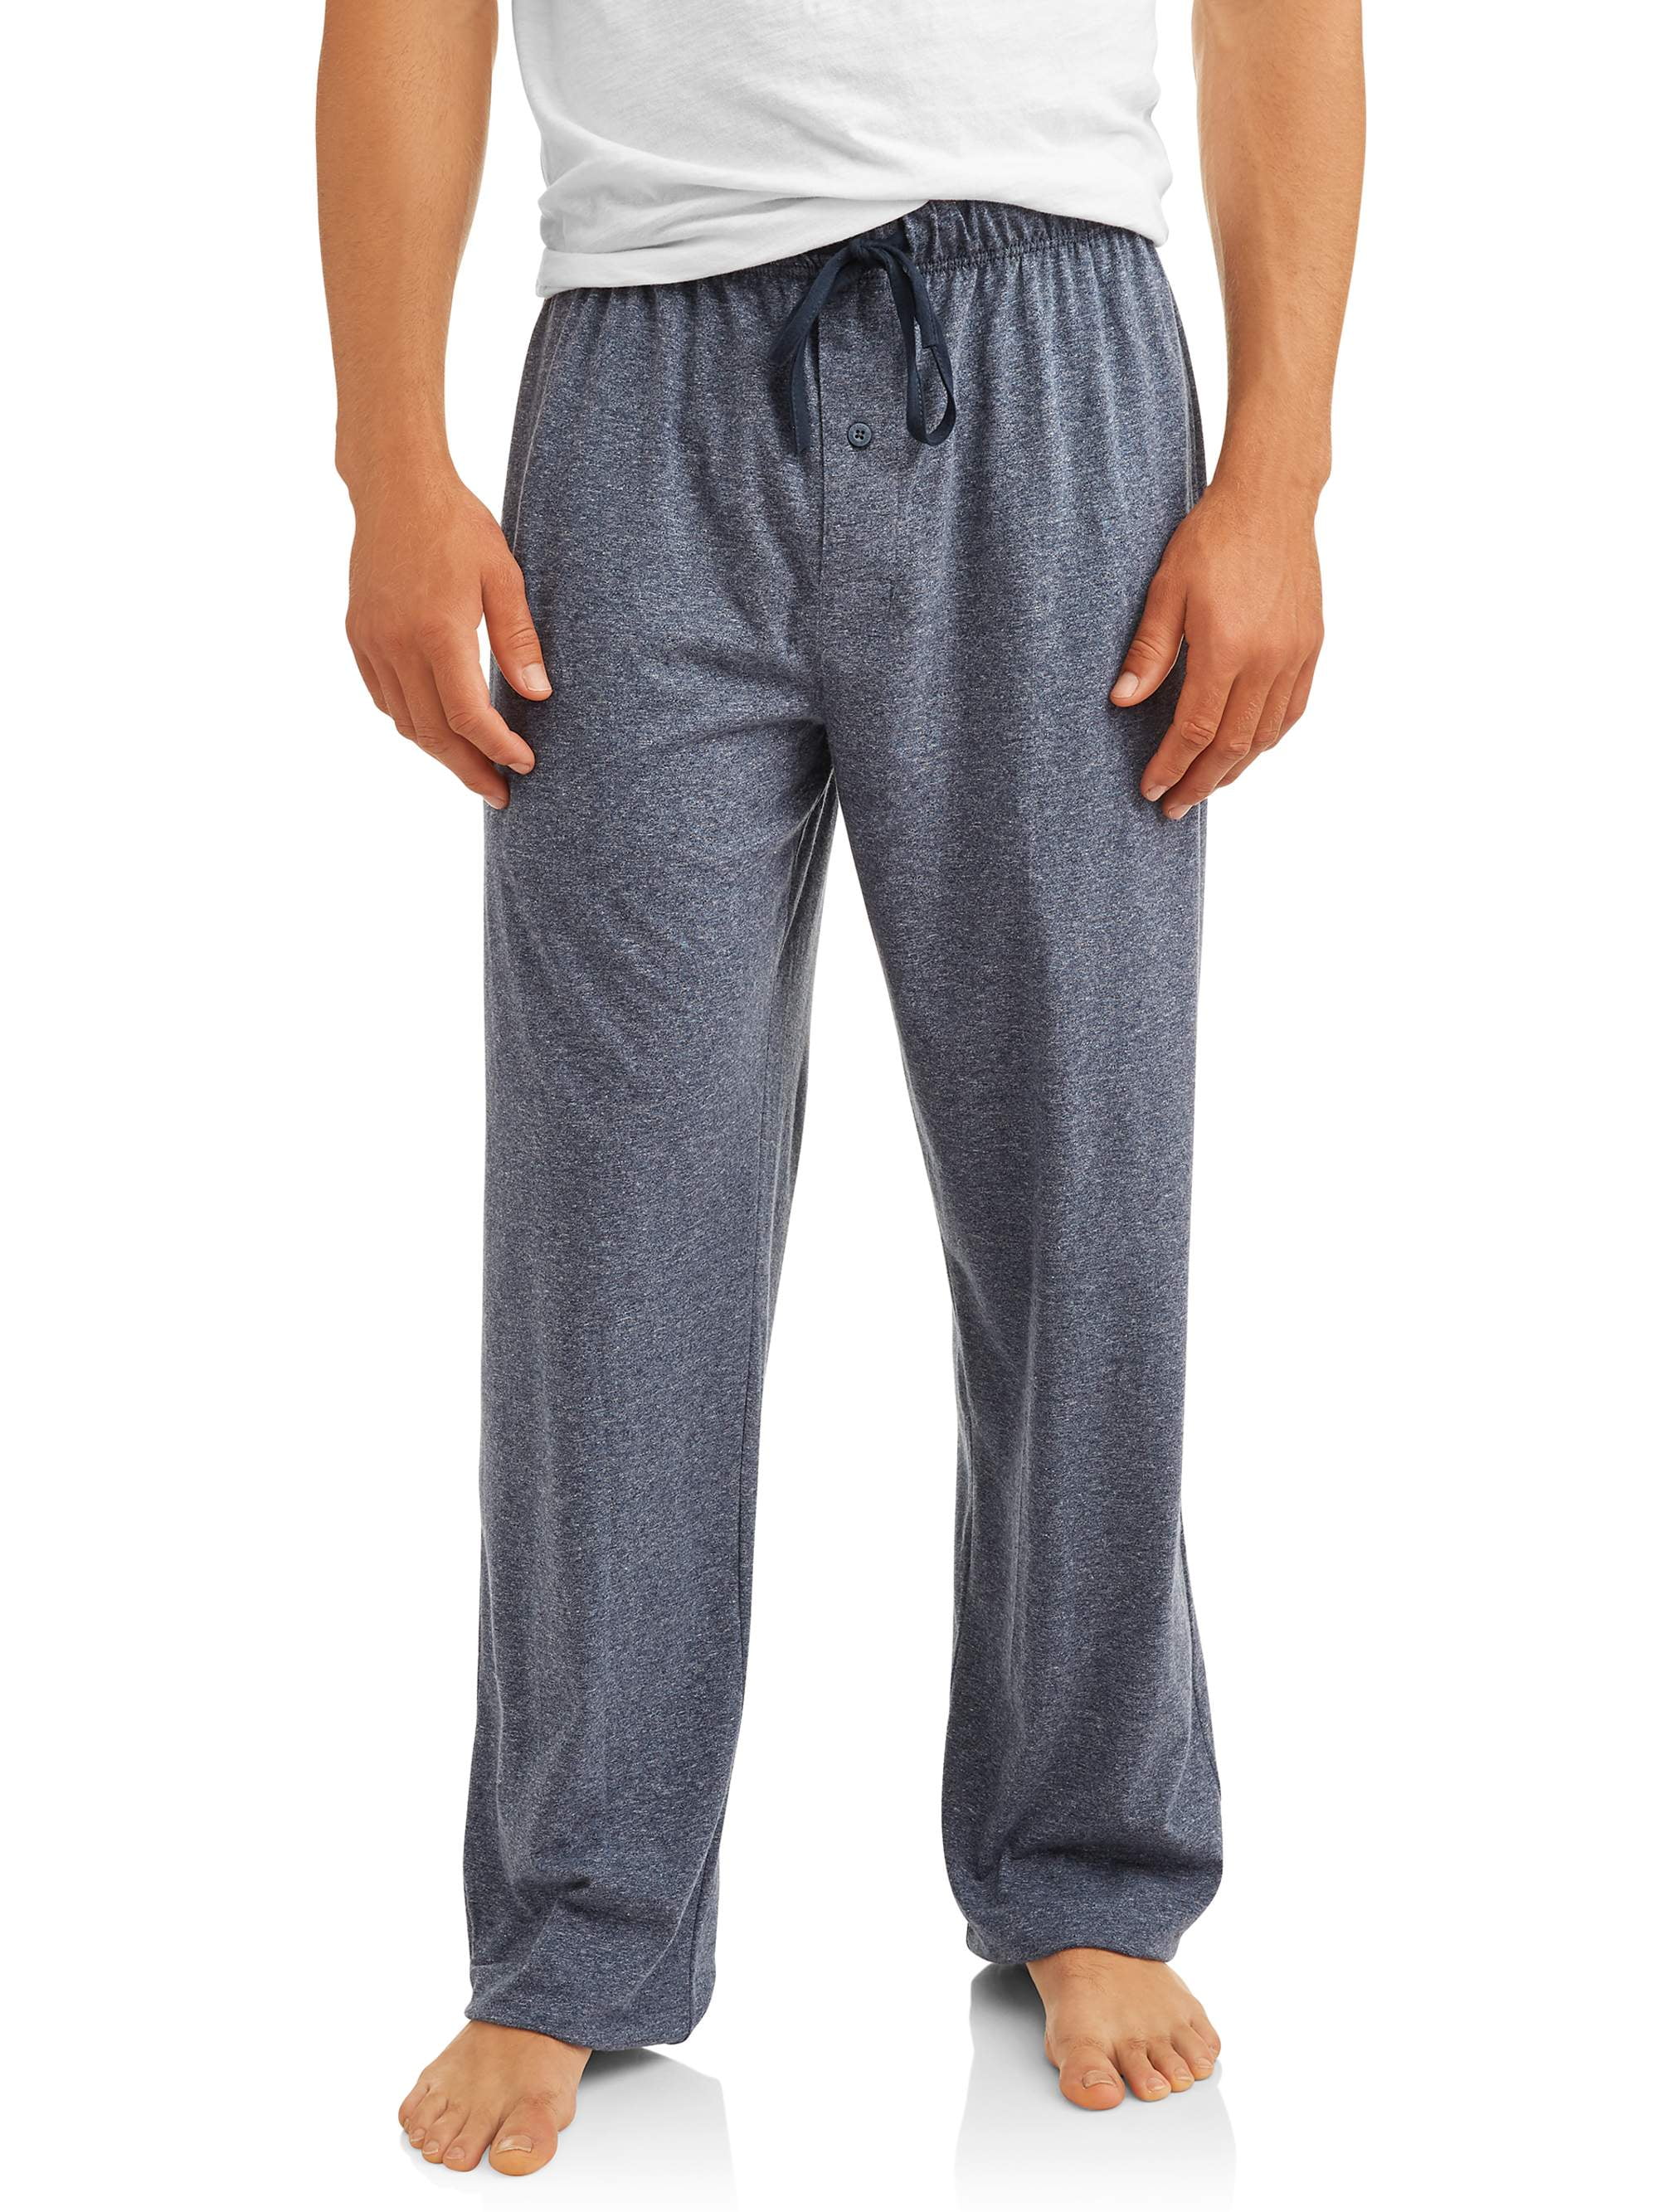 Hanes Elastic Waistband Pockets Solid Sleep Pants Pajamas (Men's or Men ...